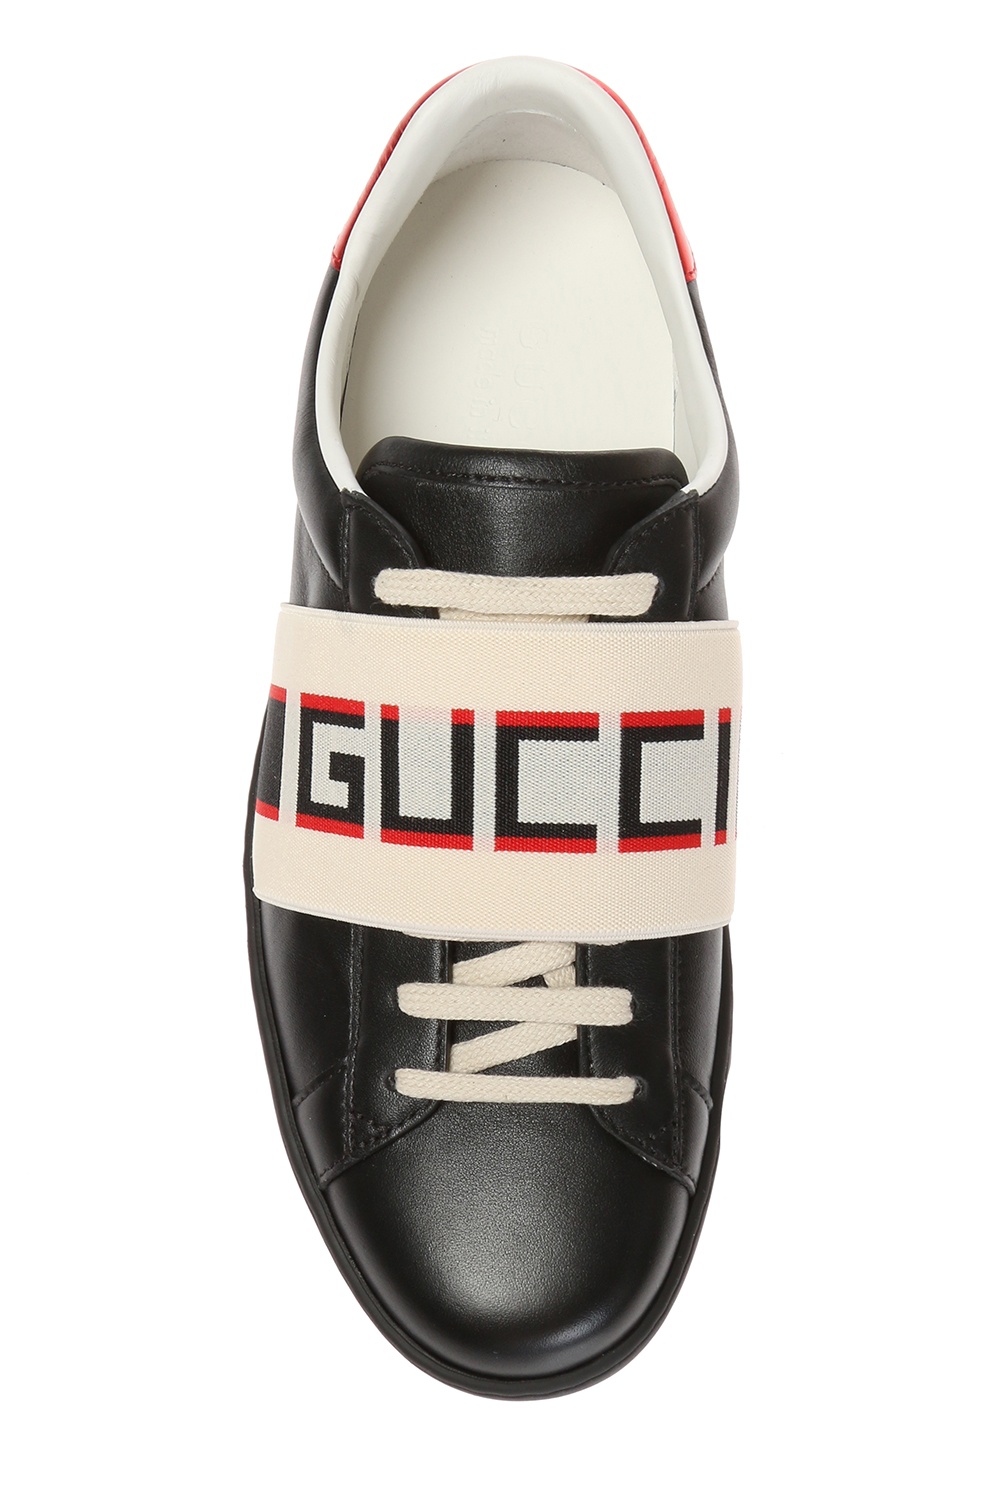 Buy Gucci Ace Stripe Leather 'Black' - 523469 0FIV0 1076